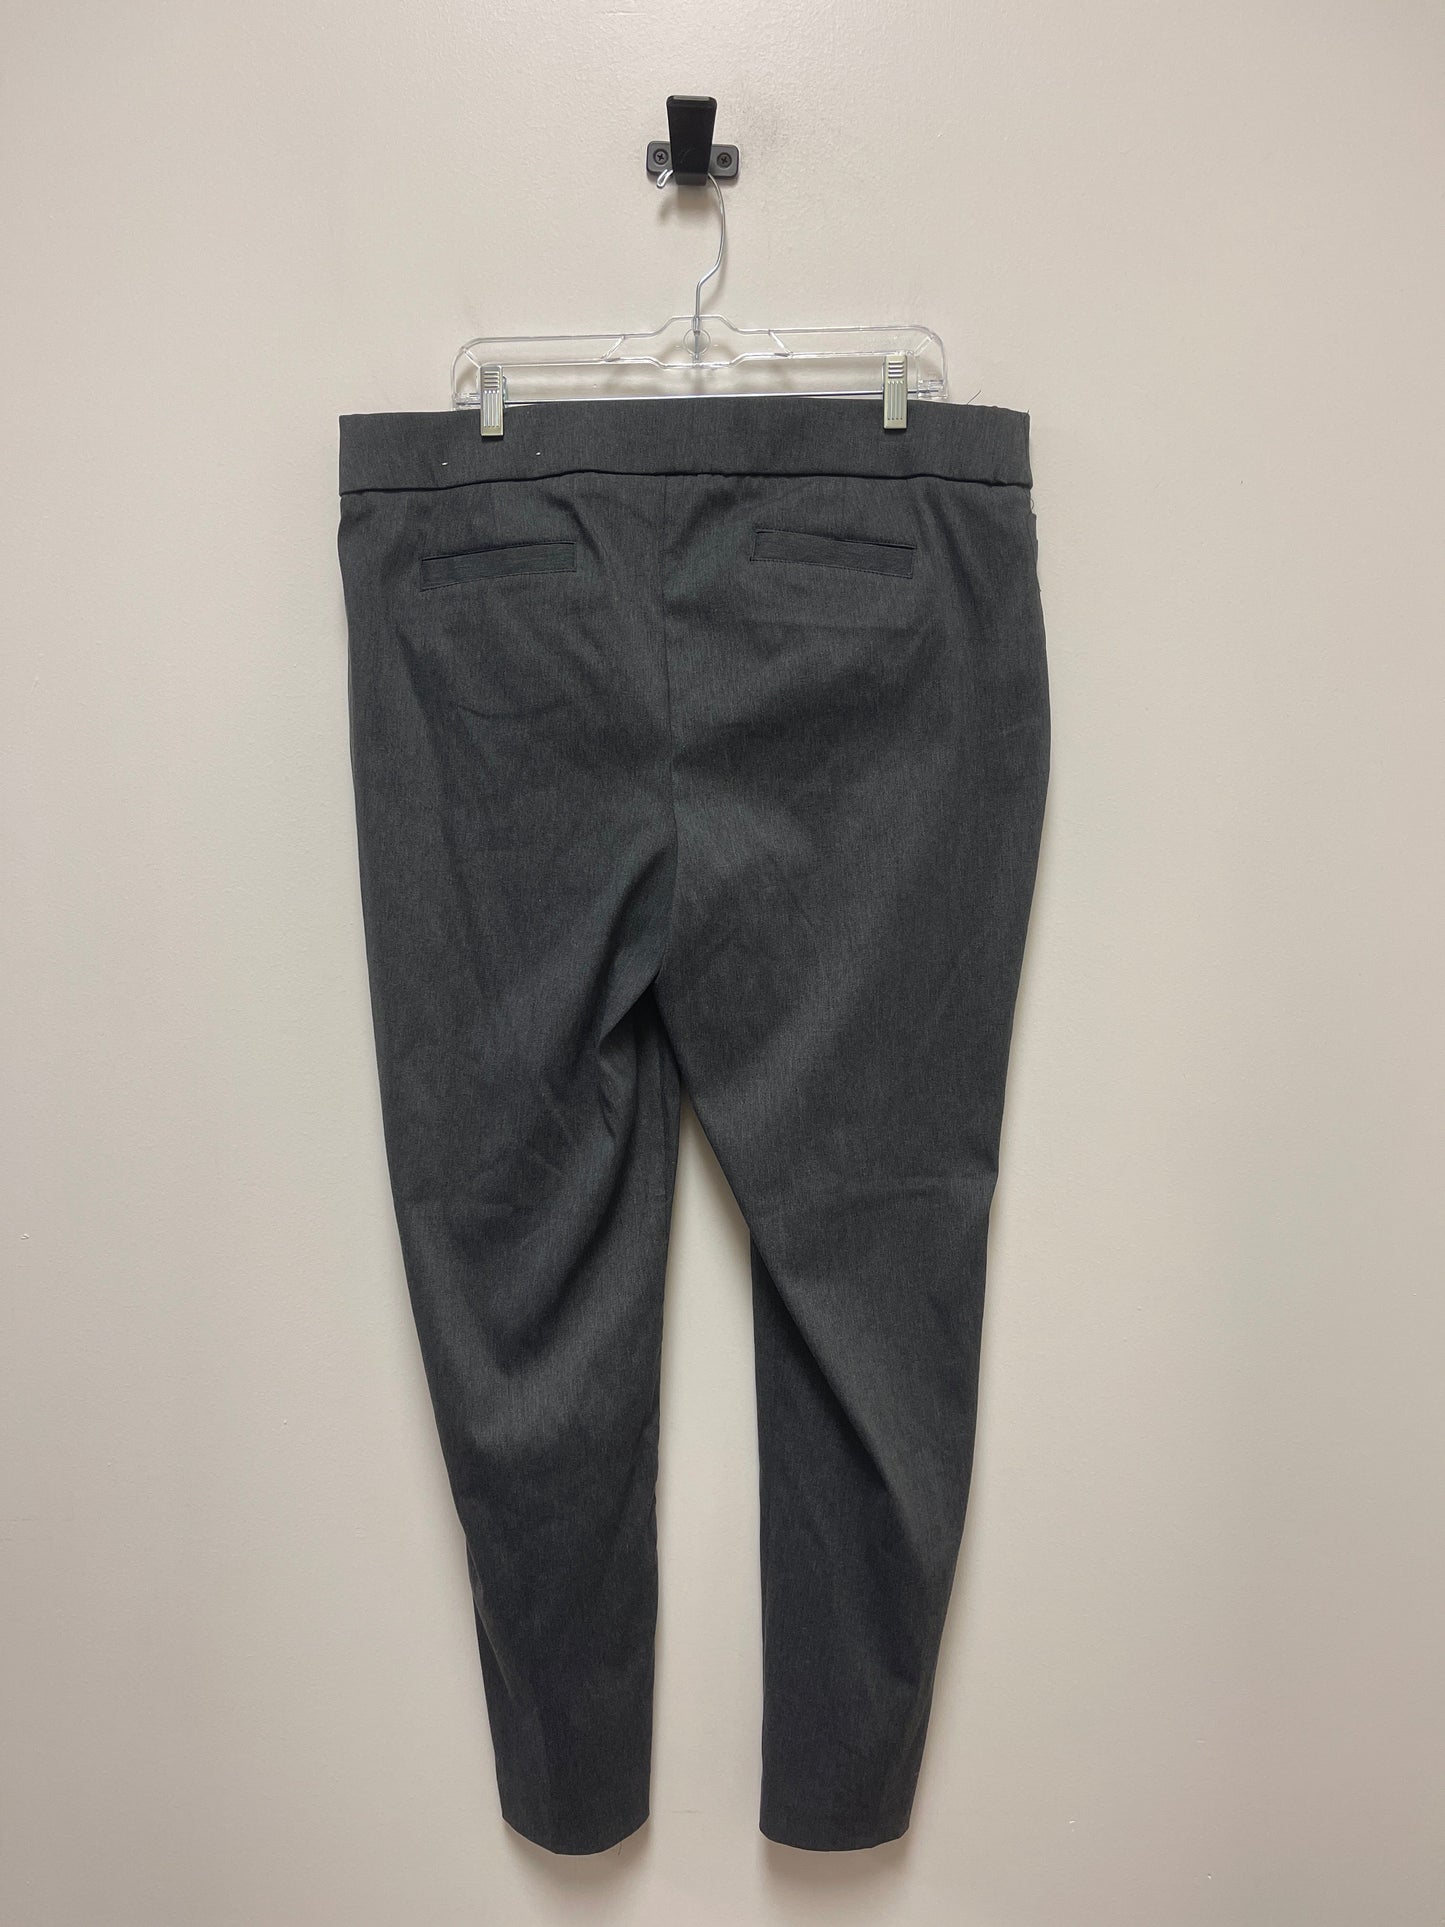 Pants Other By Liz Claiborne  Size: 18